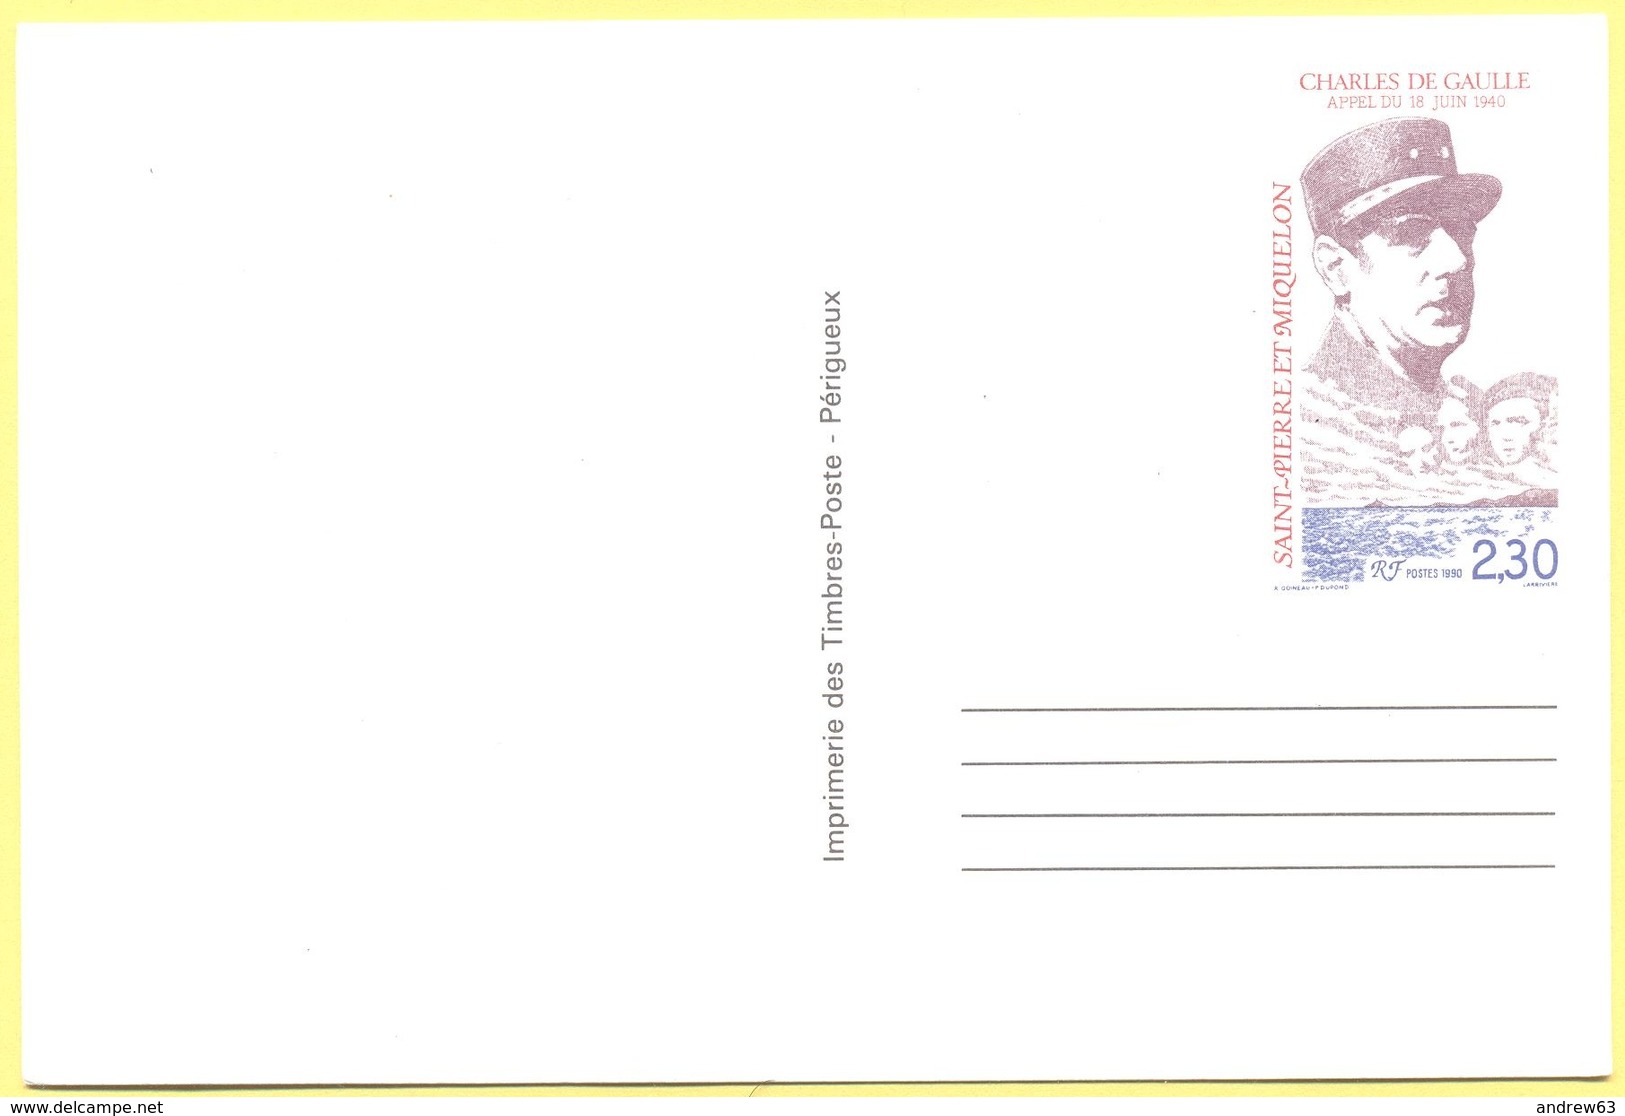 St.Pierre & Miquelon - 2,30 Charles De Gaulle - Carte Postale - Intero Postale - Entier Postal - Postal Stationery - Not - Enteros Postales